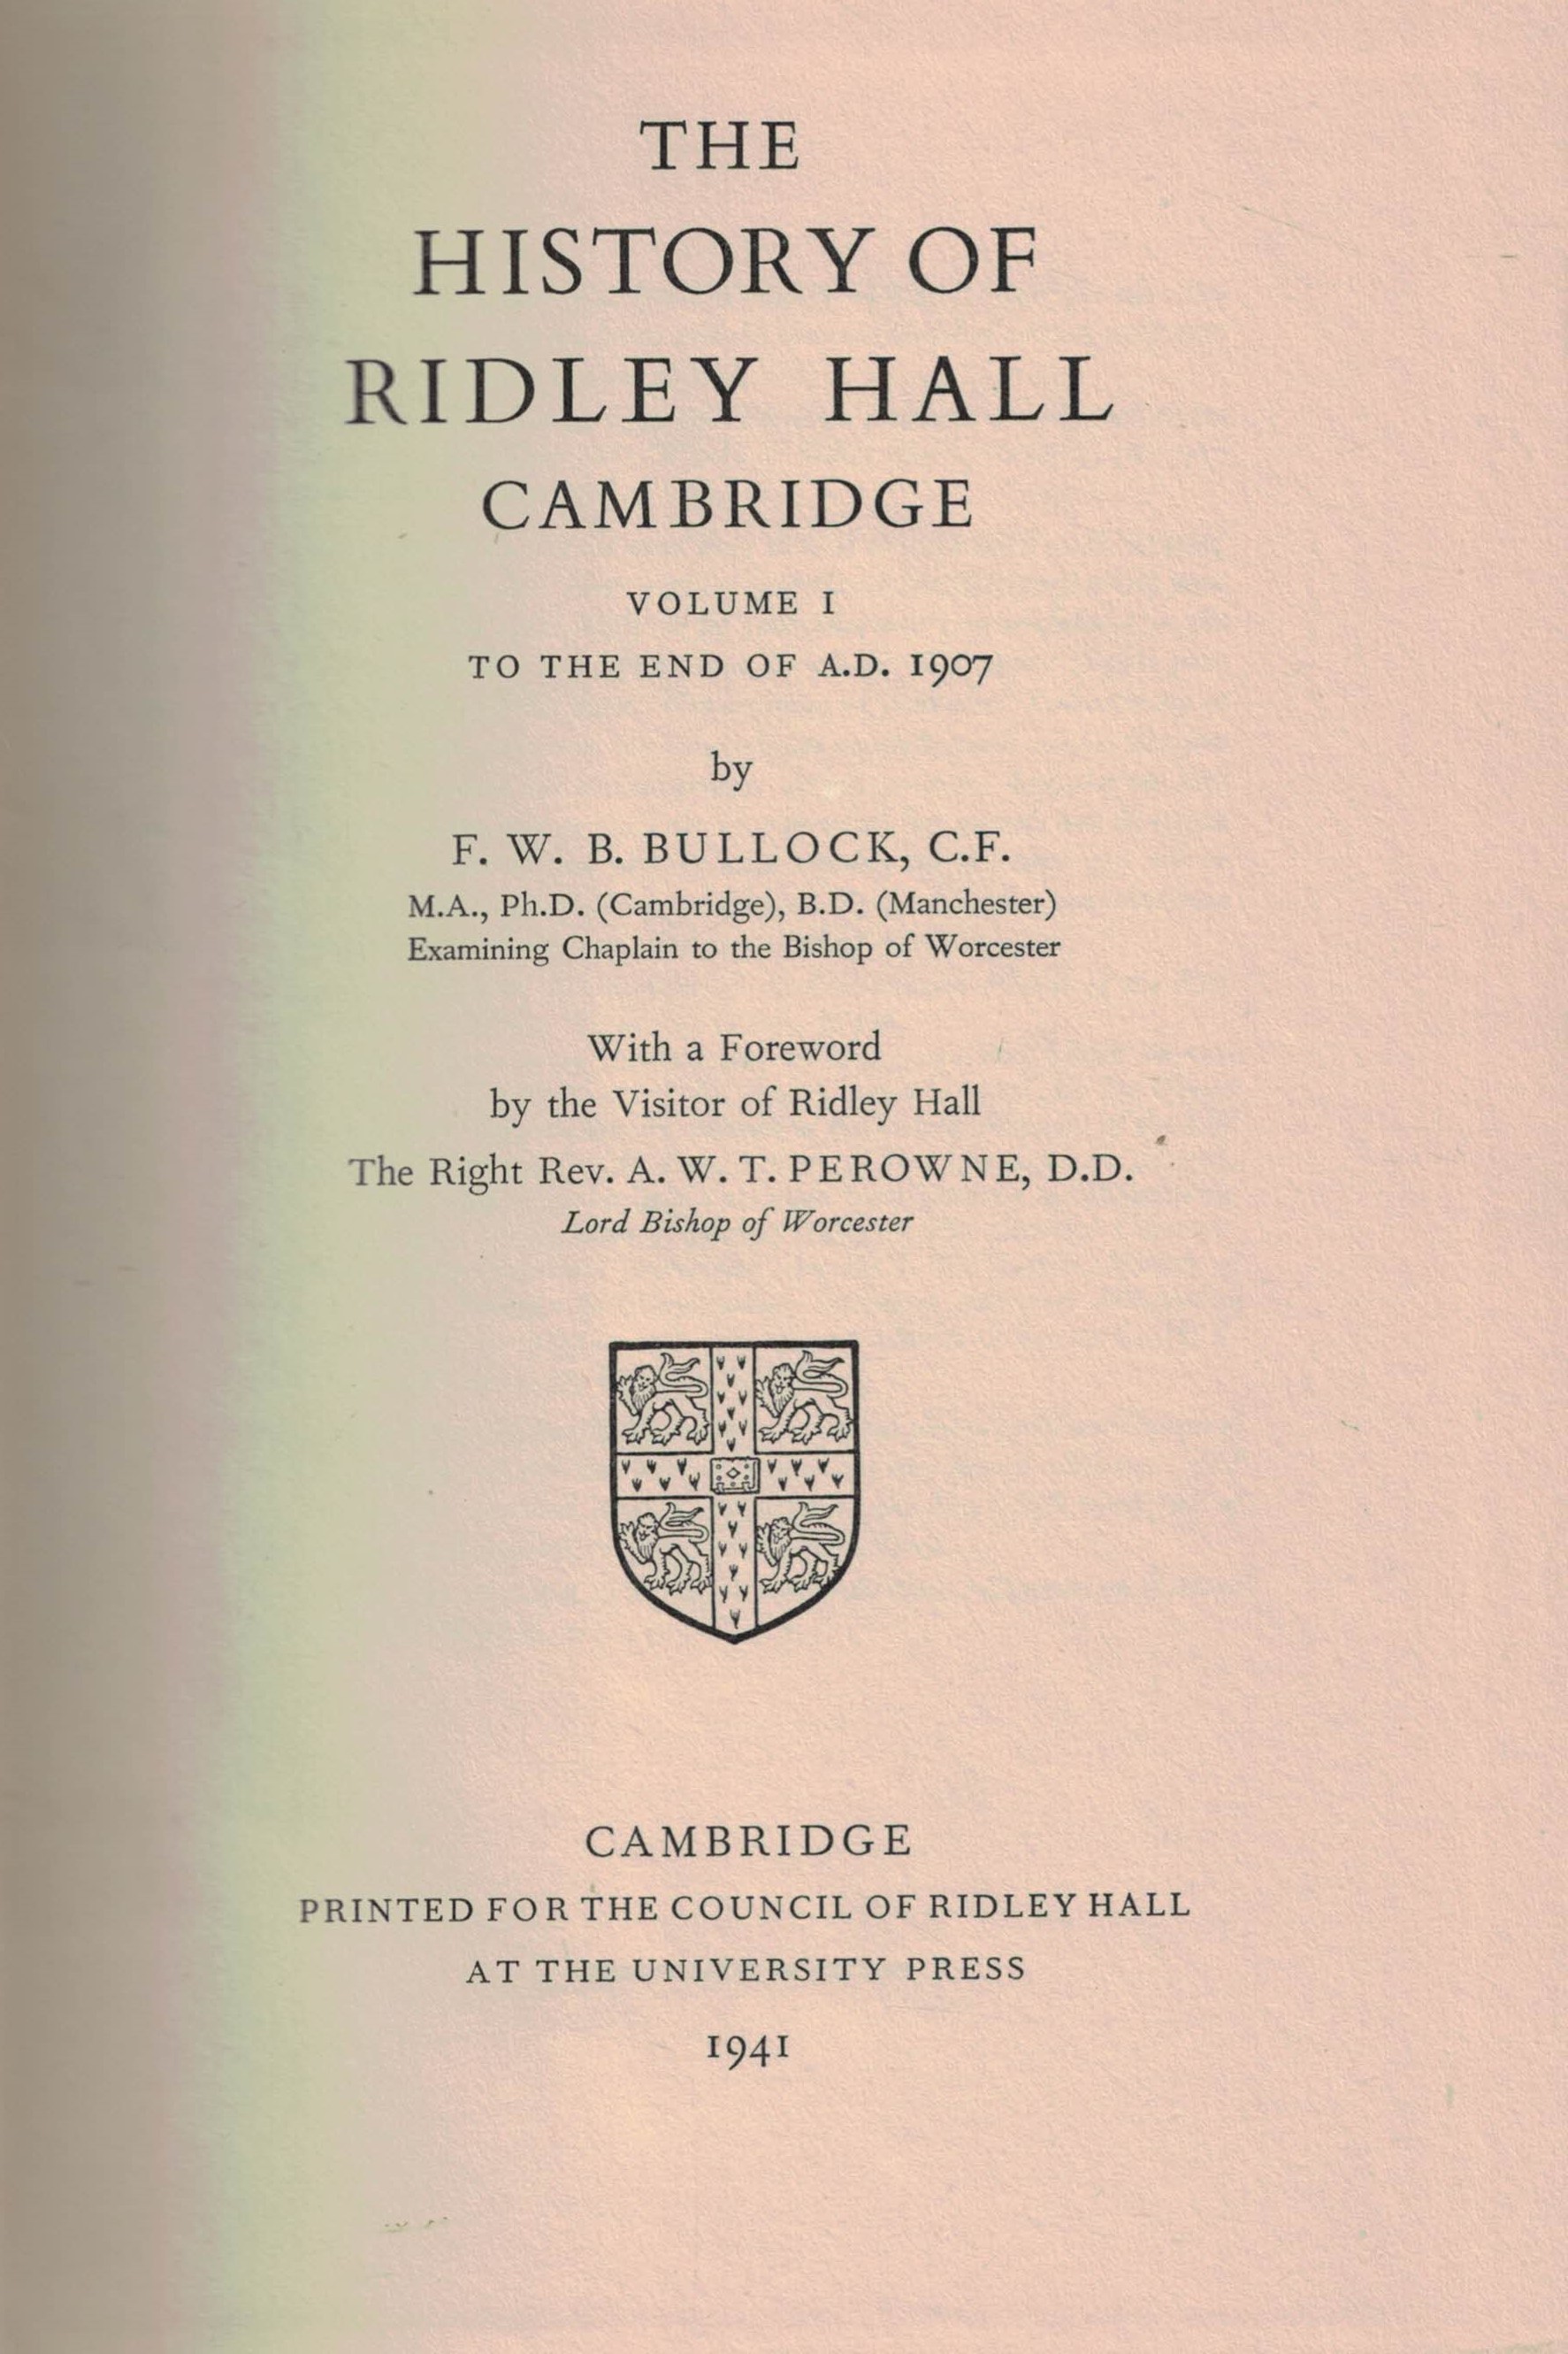 The History of Ridley Hall Cambridge. 2 volume set.